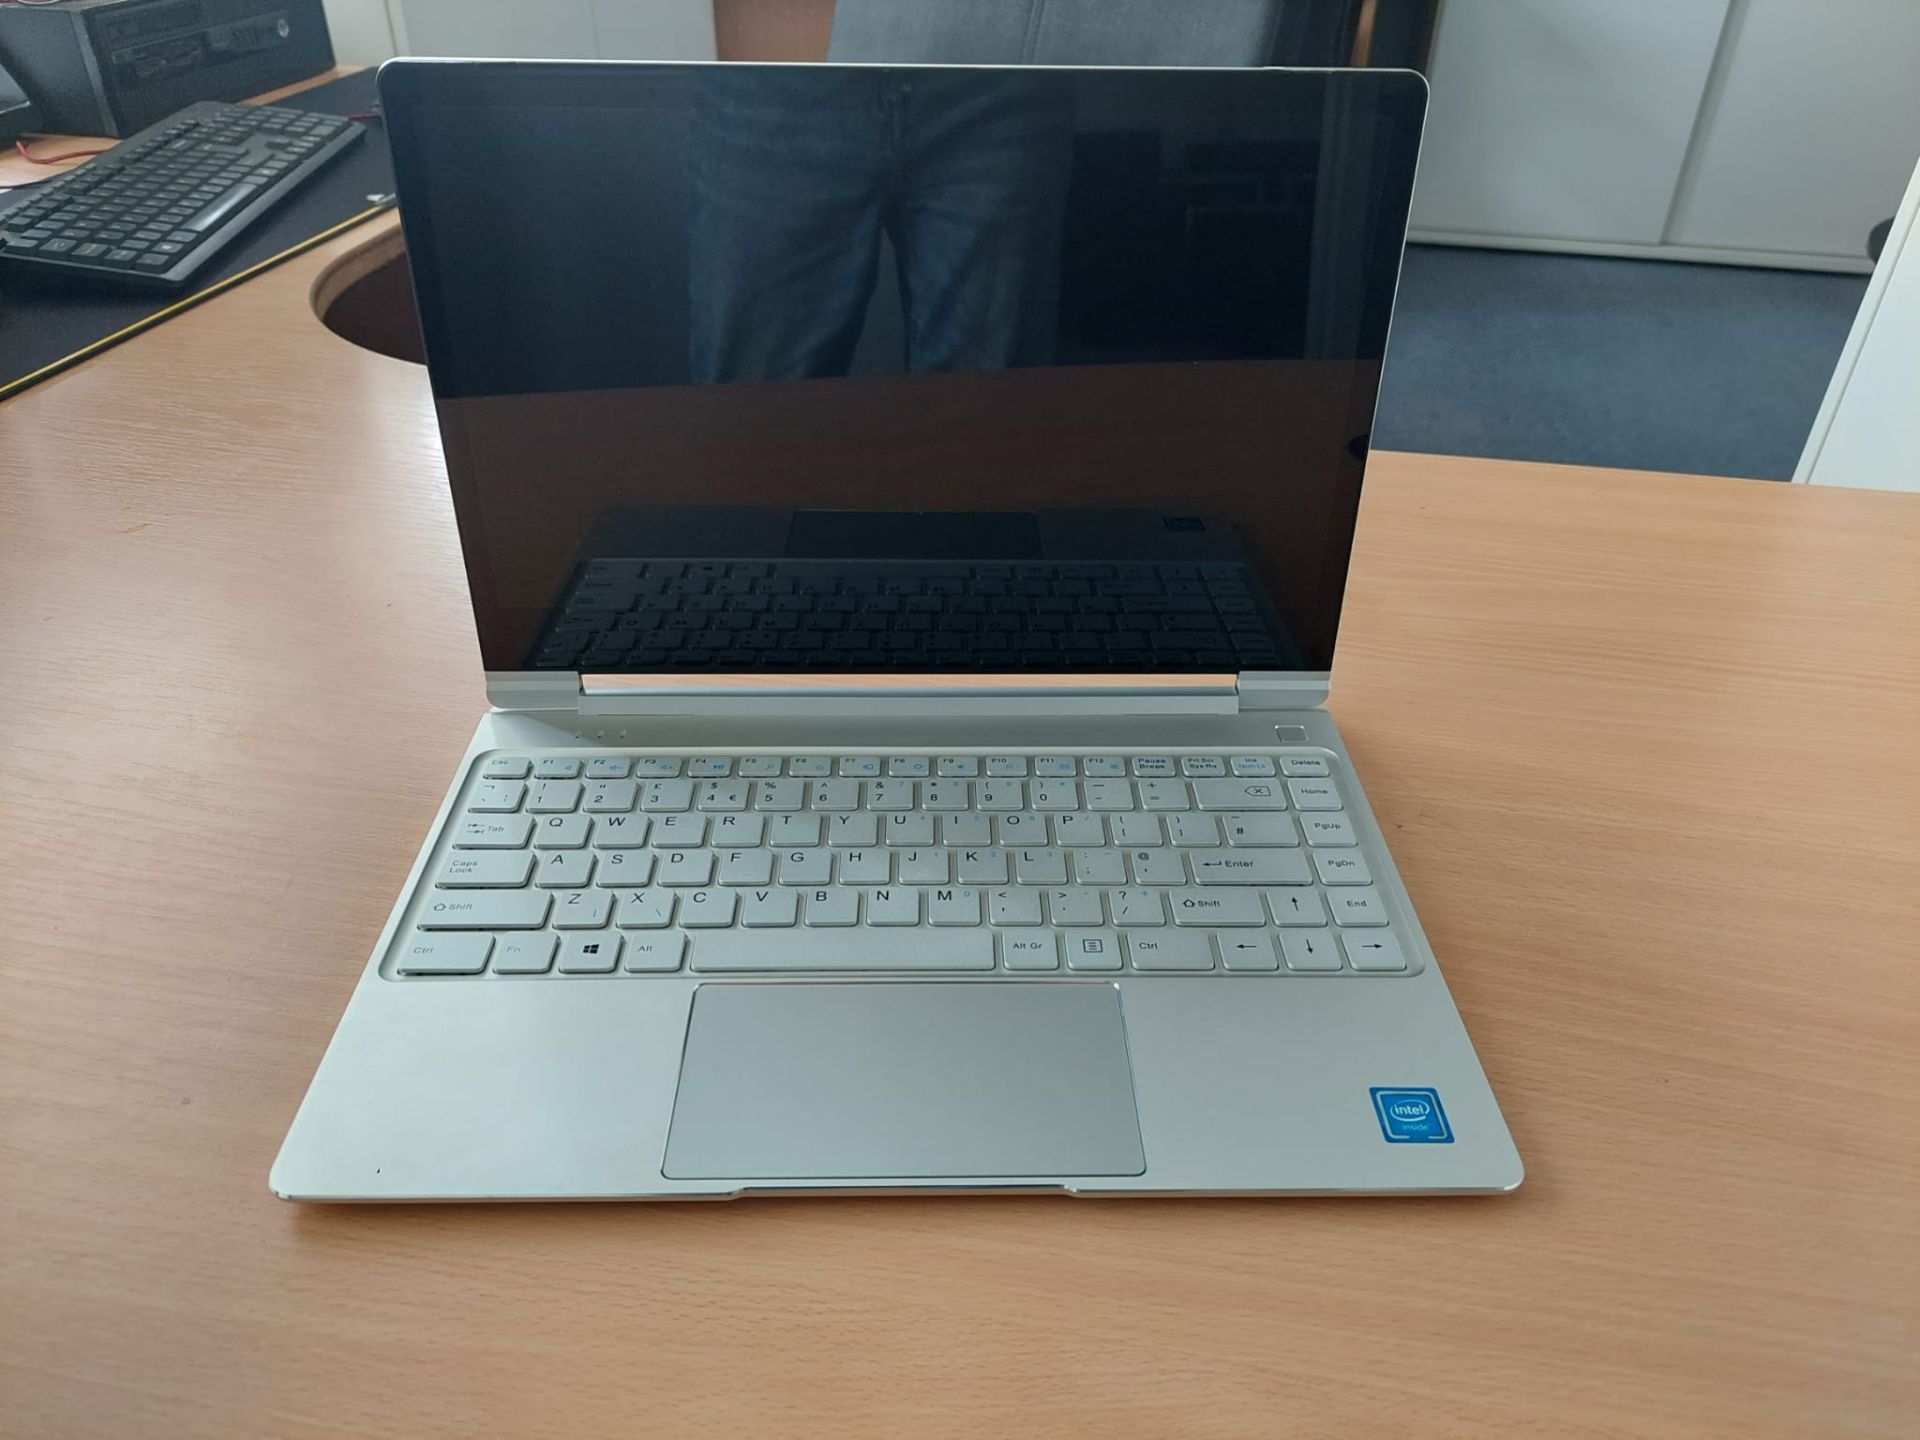 Geobook3X Silver Laptop w/ Intel Pentium N4200 CPU *NO VAT* - Image 3 of 13